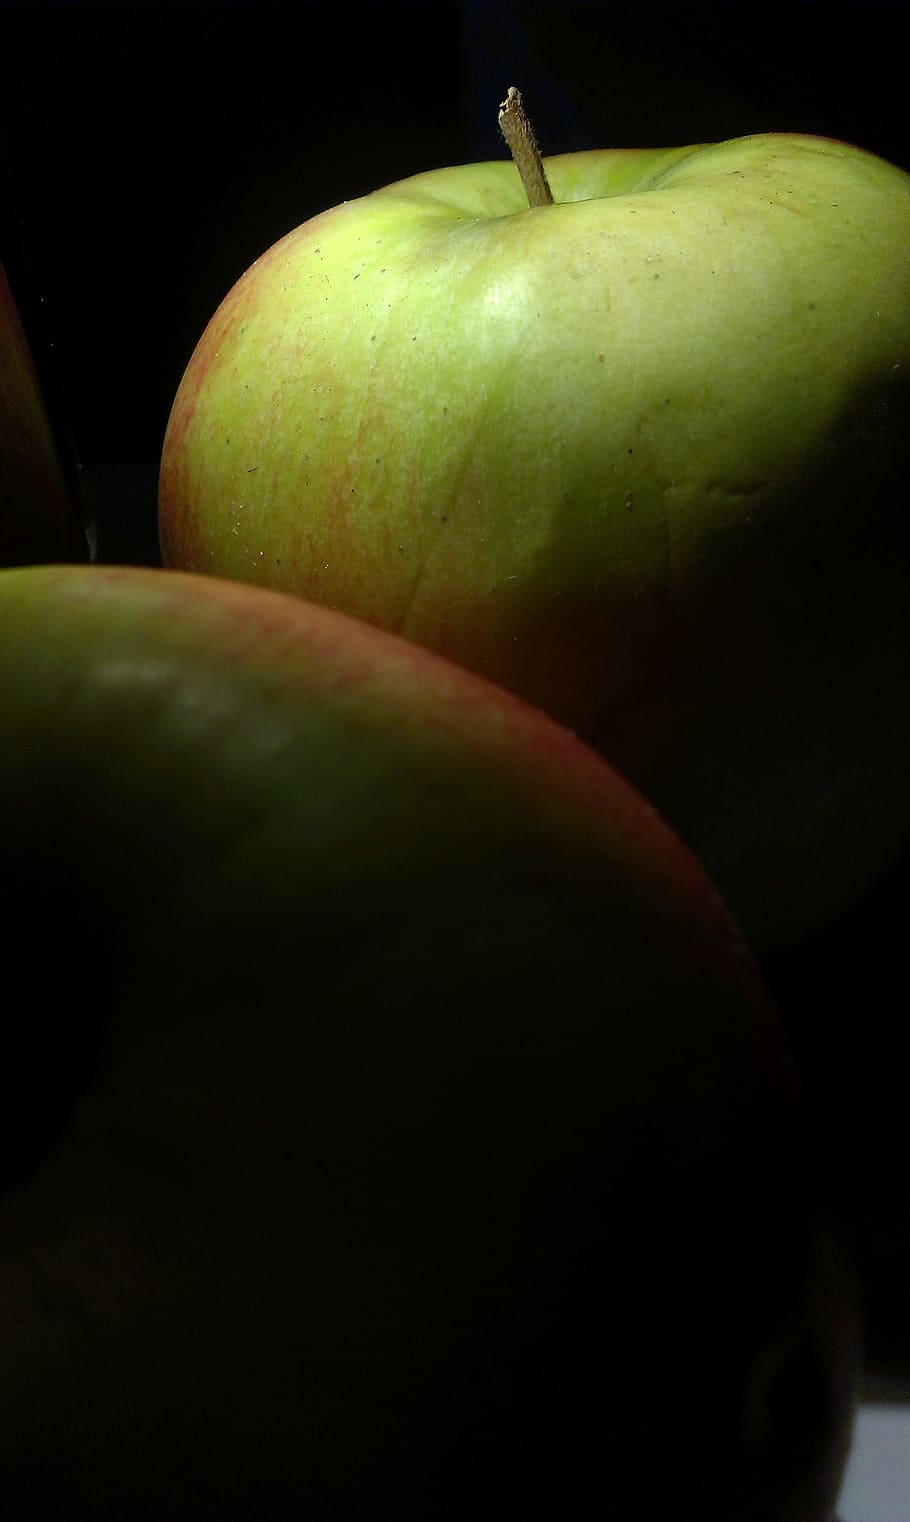 Verde, Manzana, Fruta, Manzanas, Vitamina, fibra, vitamina C, madera para pulpa de paleta, vitaminas, comer